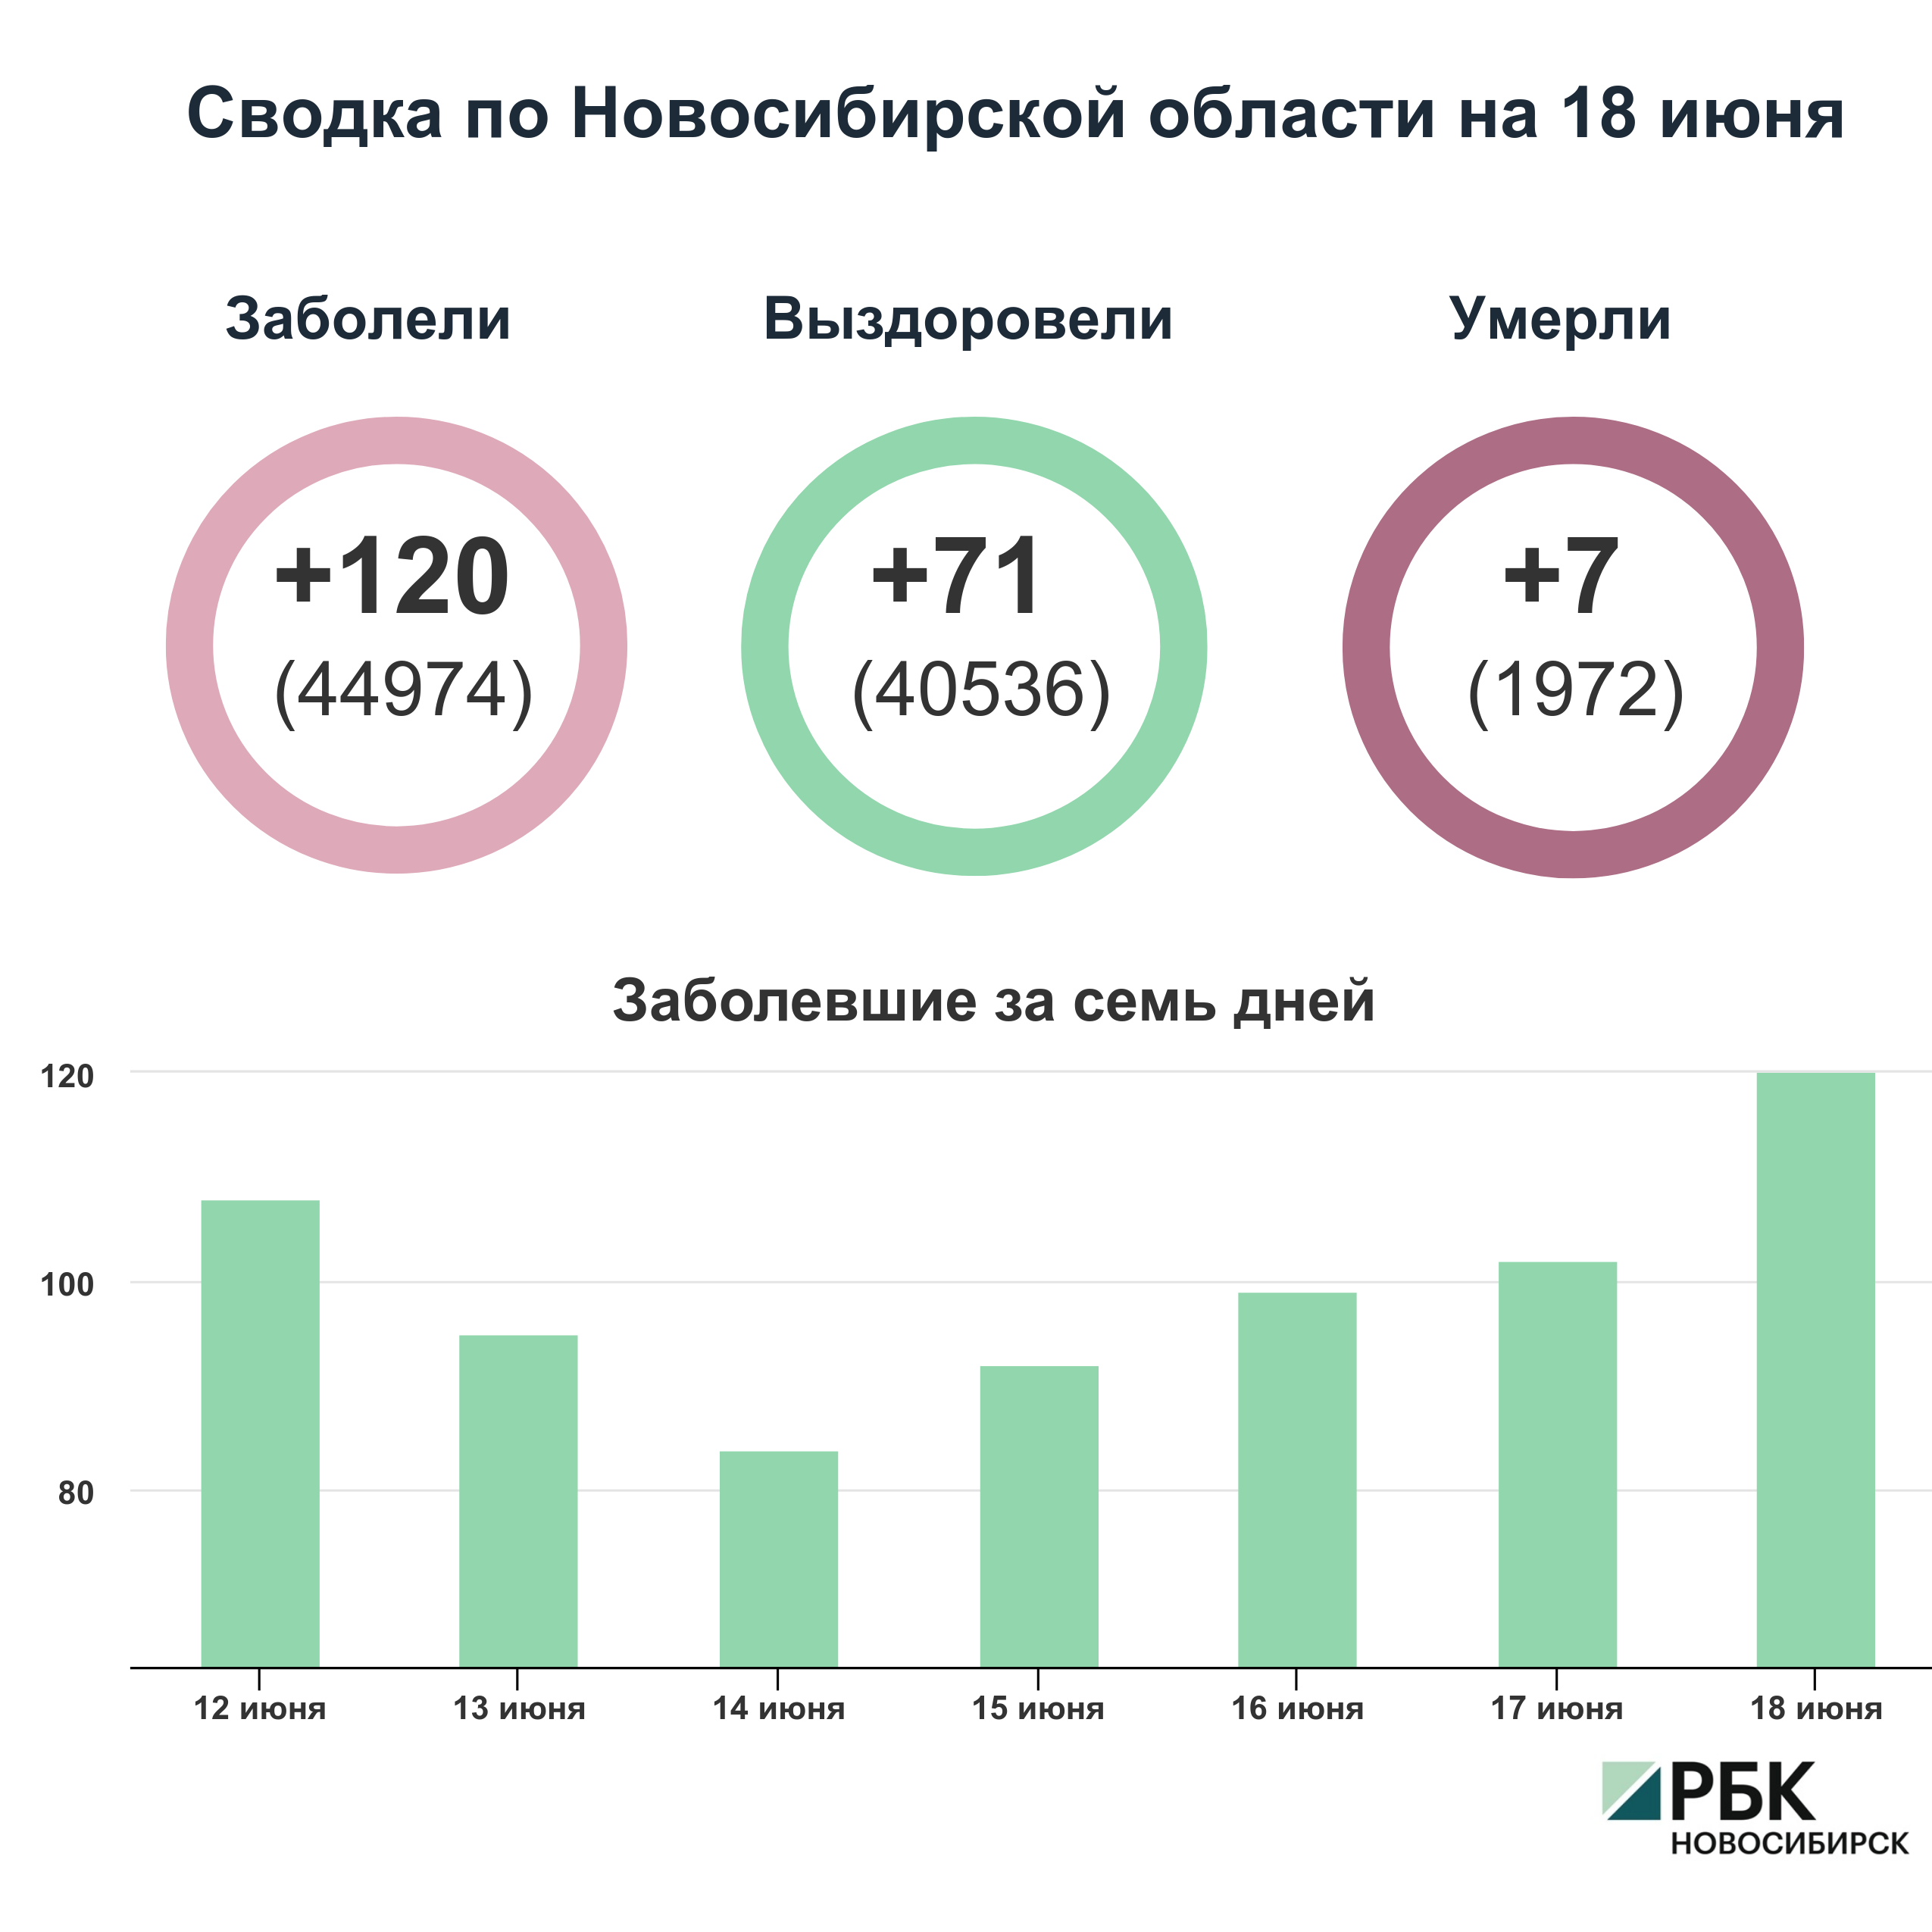 Коронавирус в Новосибирске: сводка на 18 июня